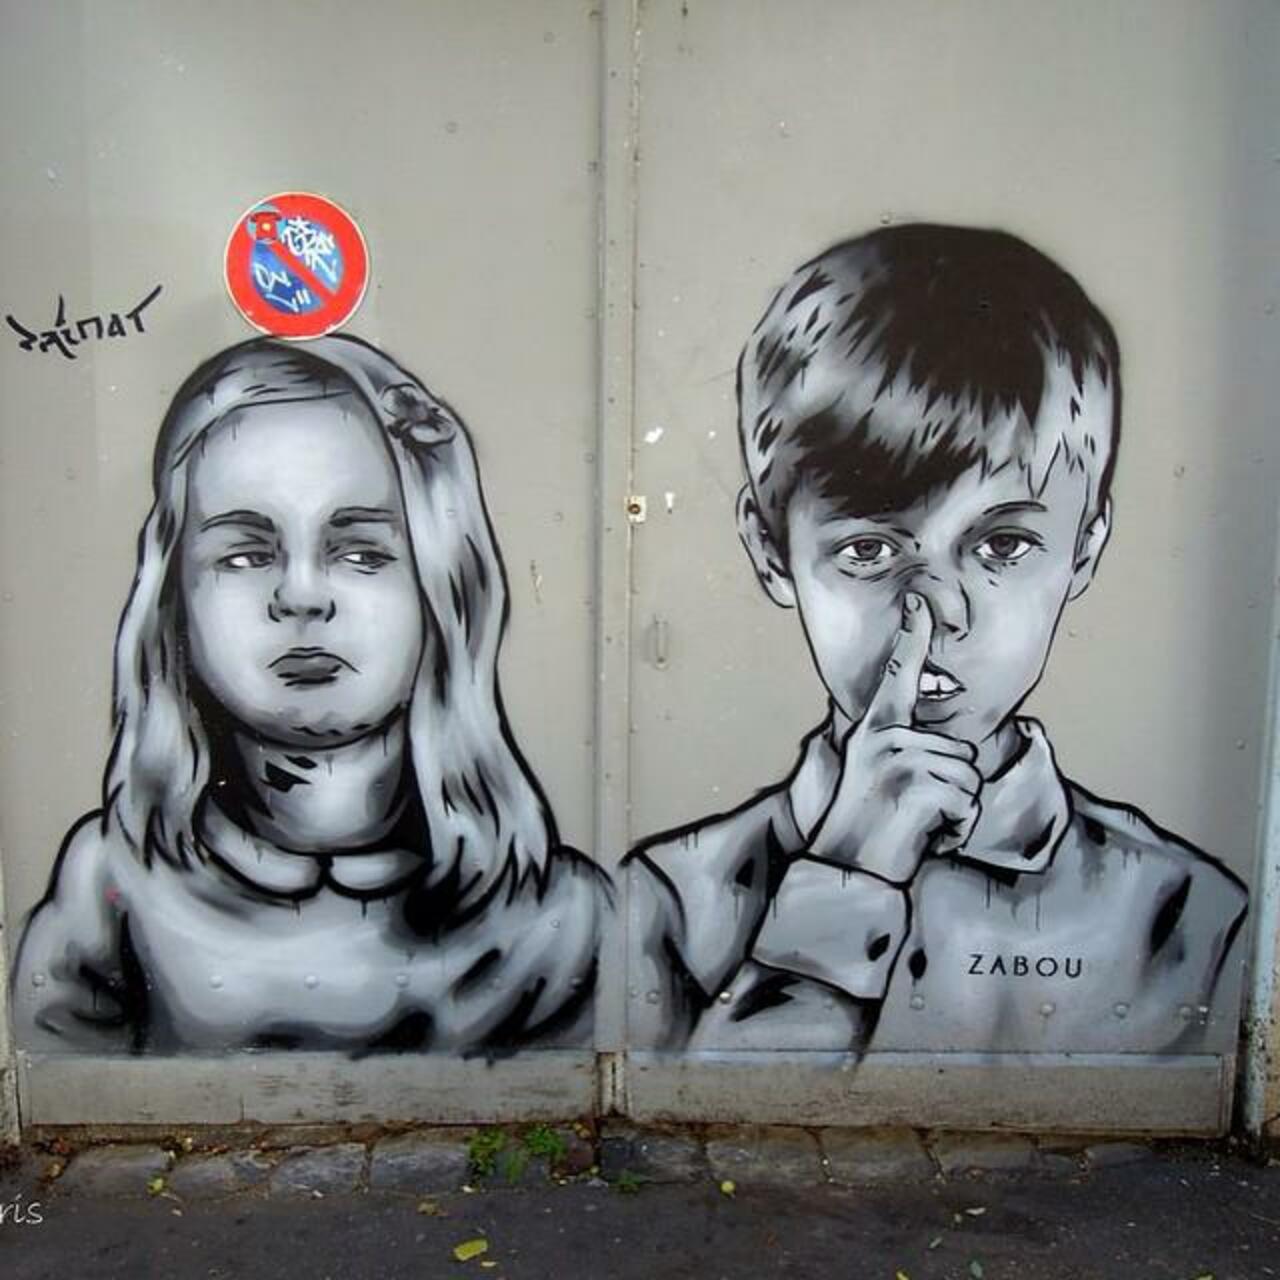 circumjacent_fr: #Paris #graffiti photo by frenchiesinparis http://ift.tt/1WSJCOc #StreetArt http://t.co/HsBi3JQPvv